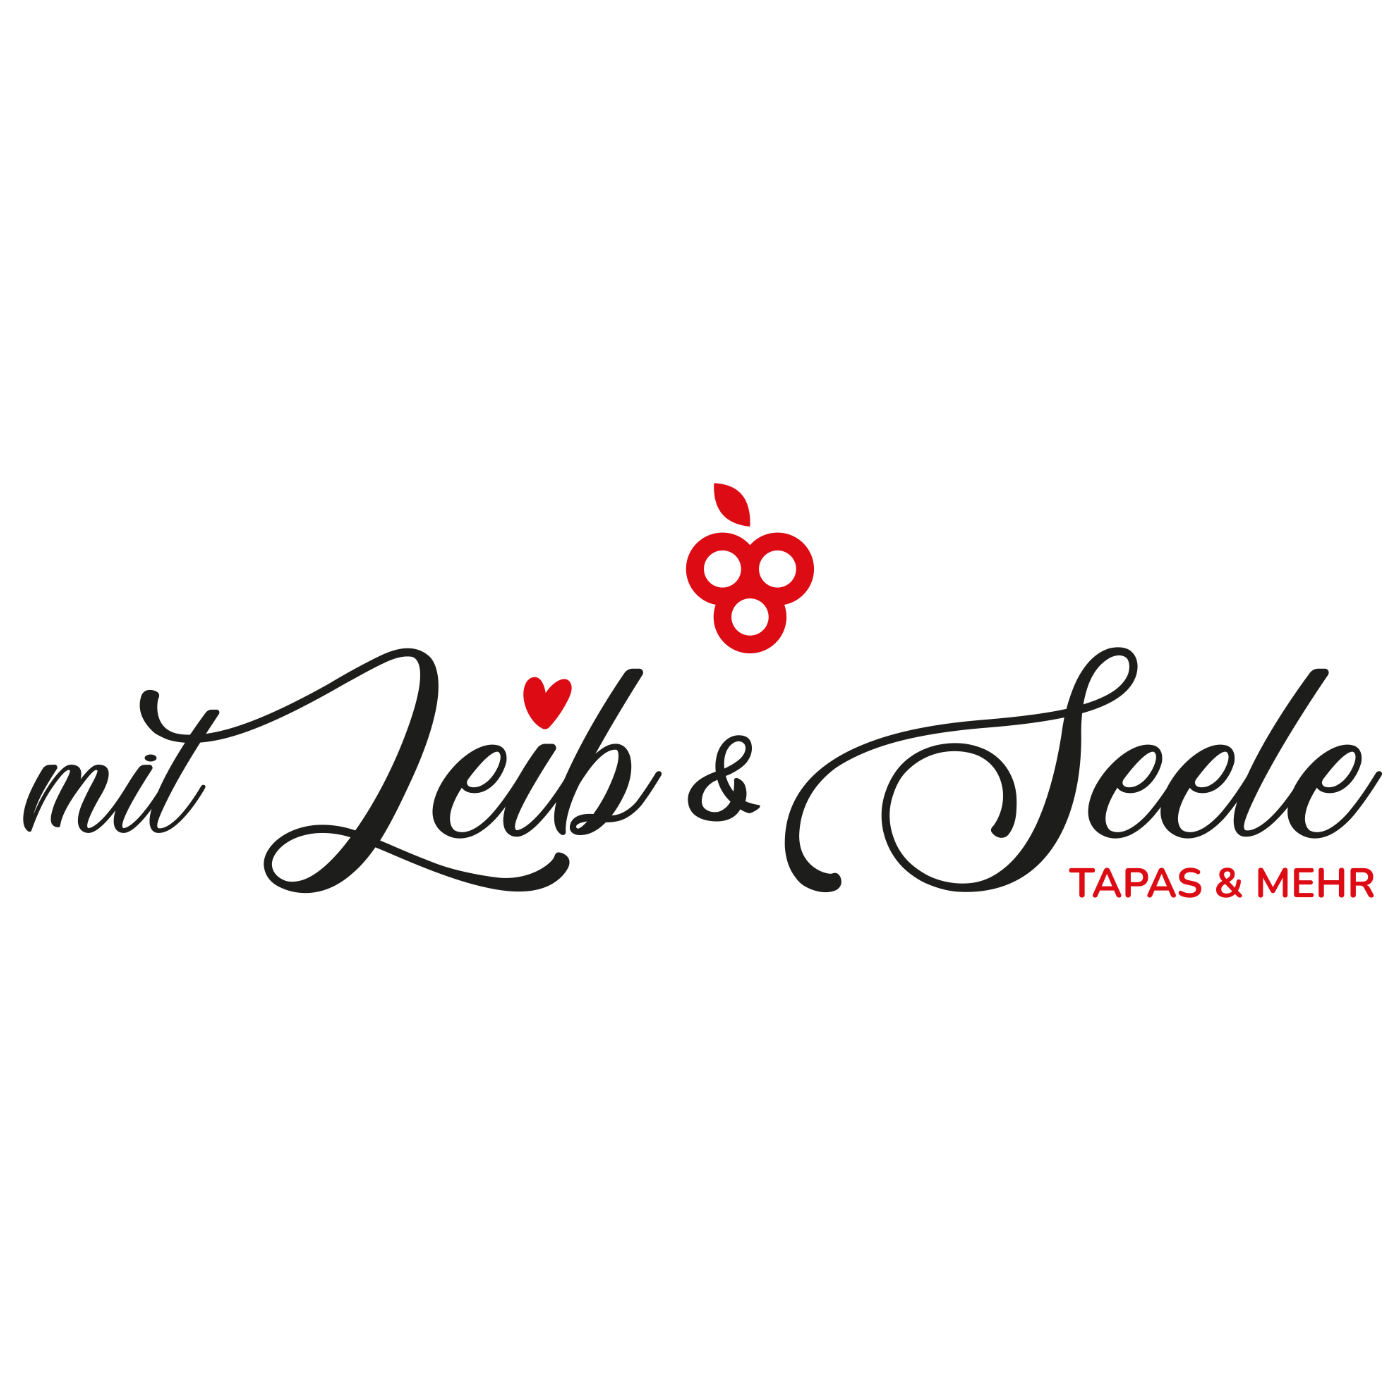 Mit Leib & Seele Tapas & mehr in Laer Kreis Steinfurt - Logo